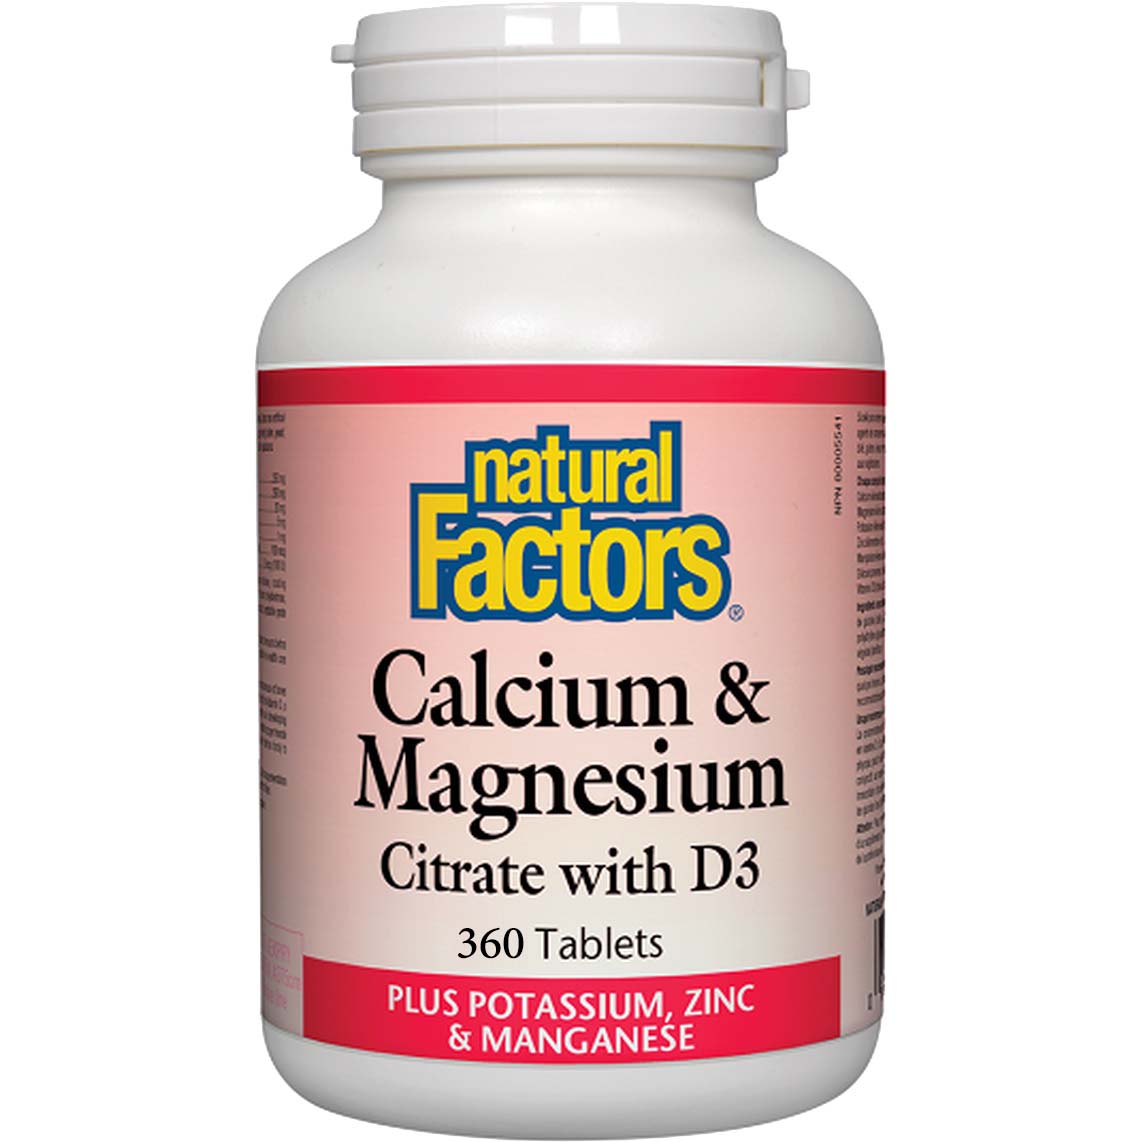 Natural Factors Calcium & Magnesium Citrate with D3 Plus Potassium, Zinc & Manganese 360 Tablets